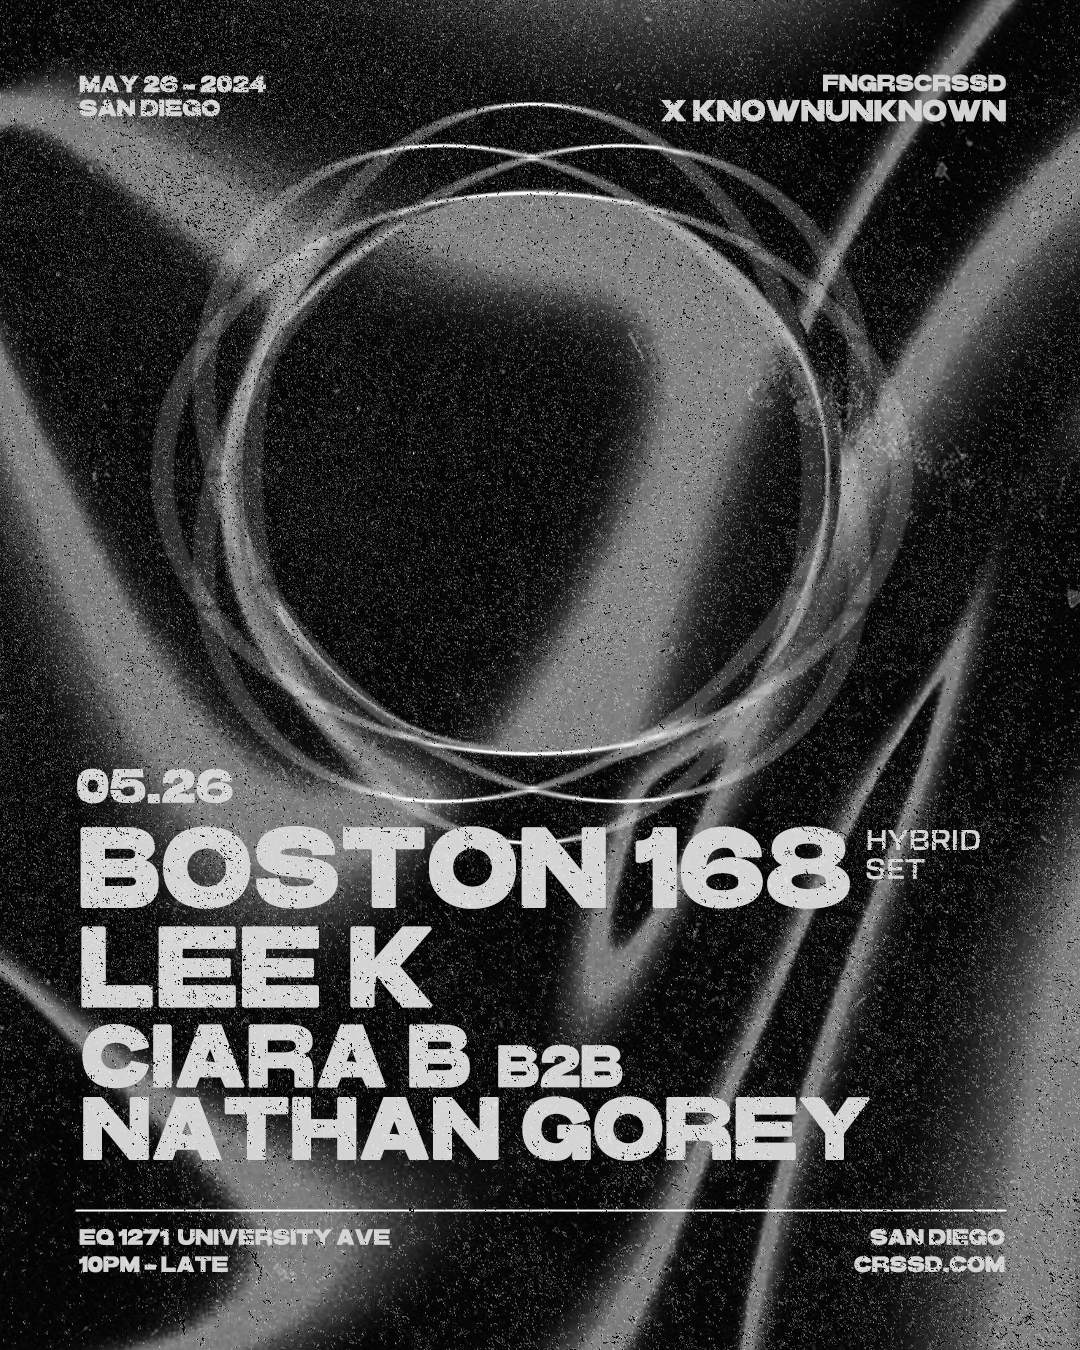 FNGRS CRSSD presents Boston 168 + Lee K - フライヤー表